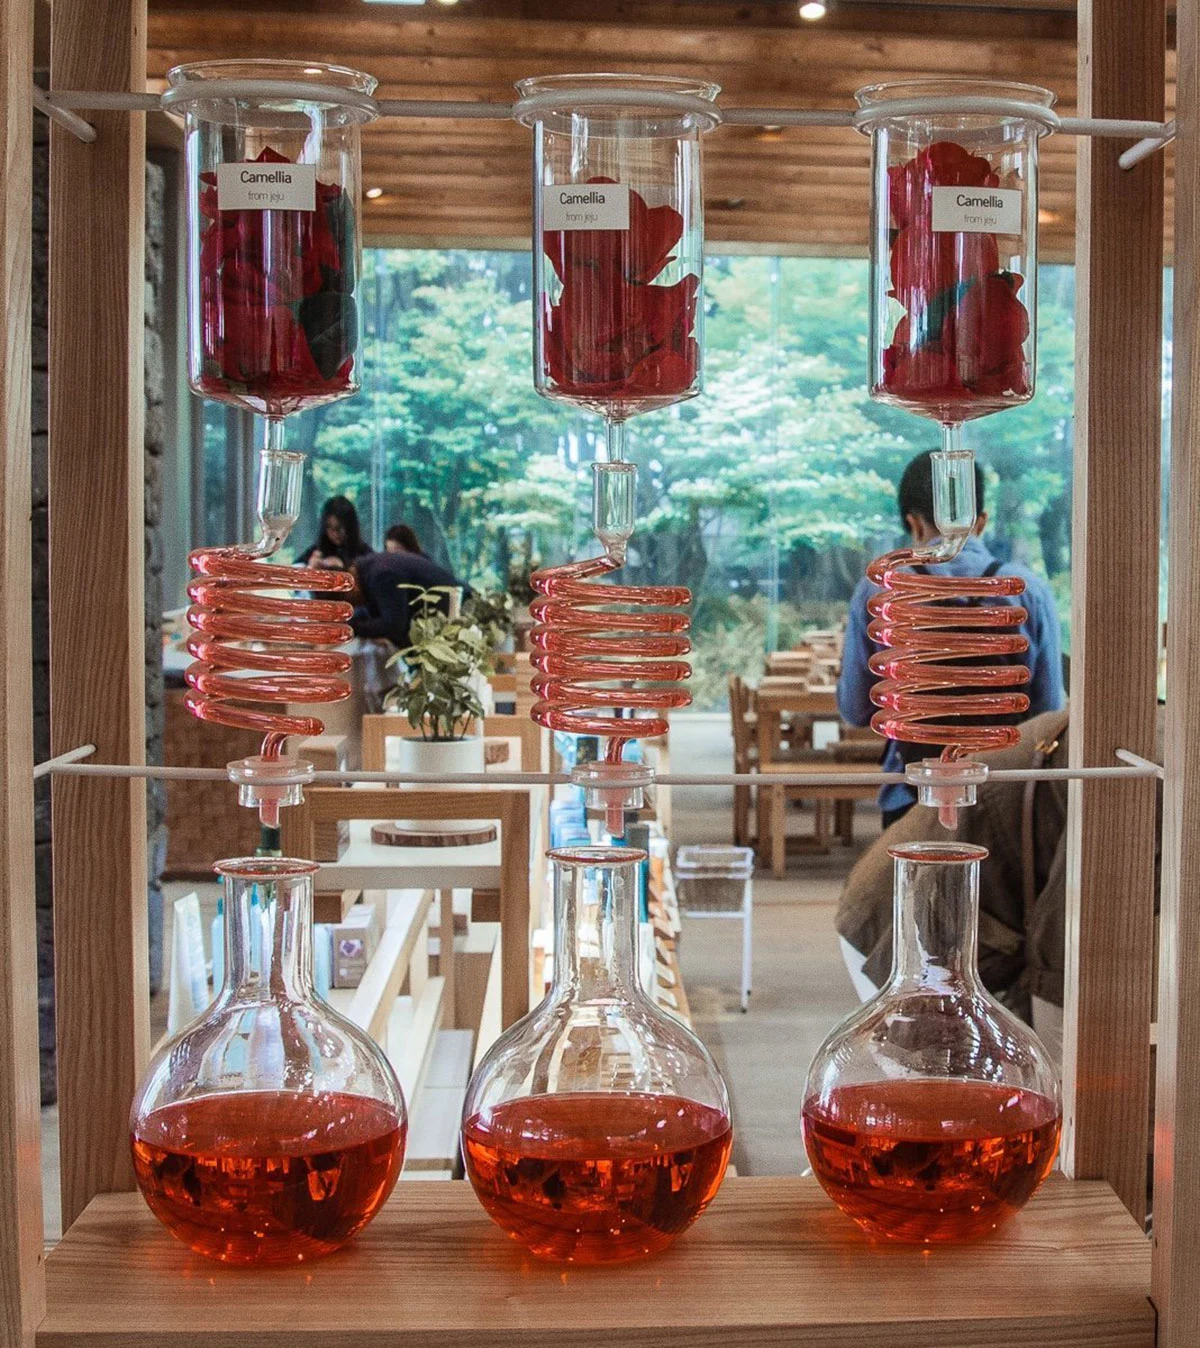 Cafe inside the O’sulloc Tea Museum on Jeju Island